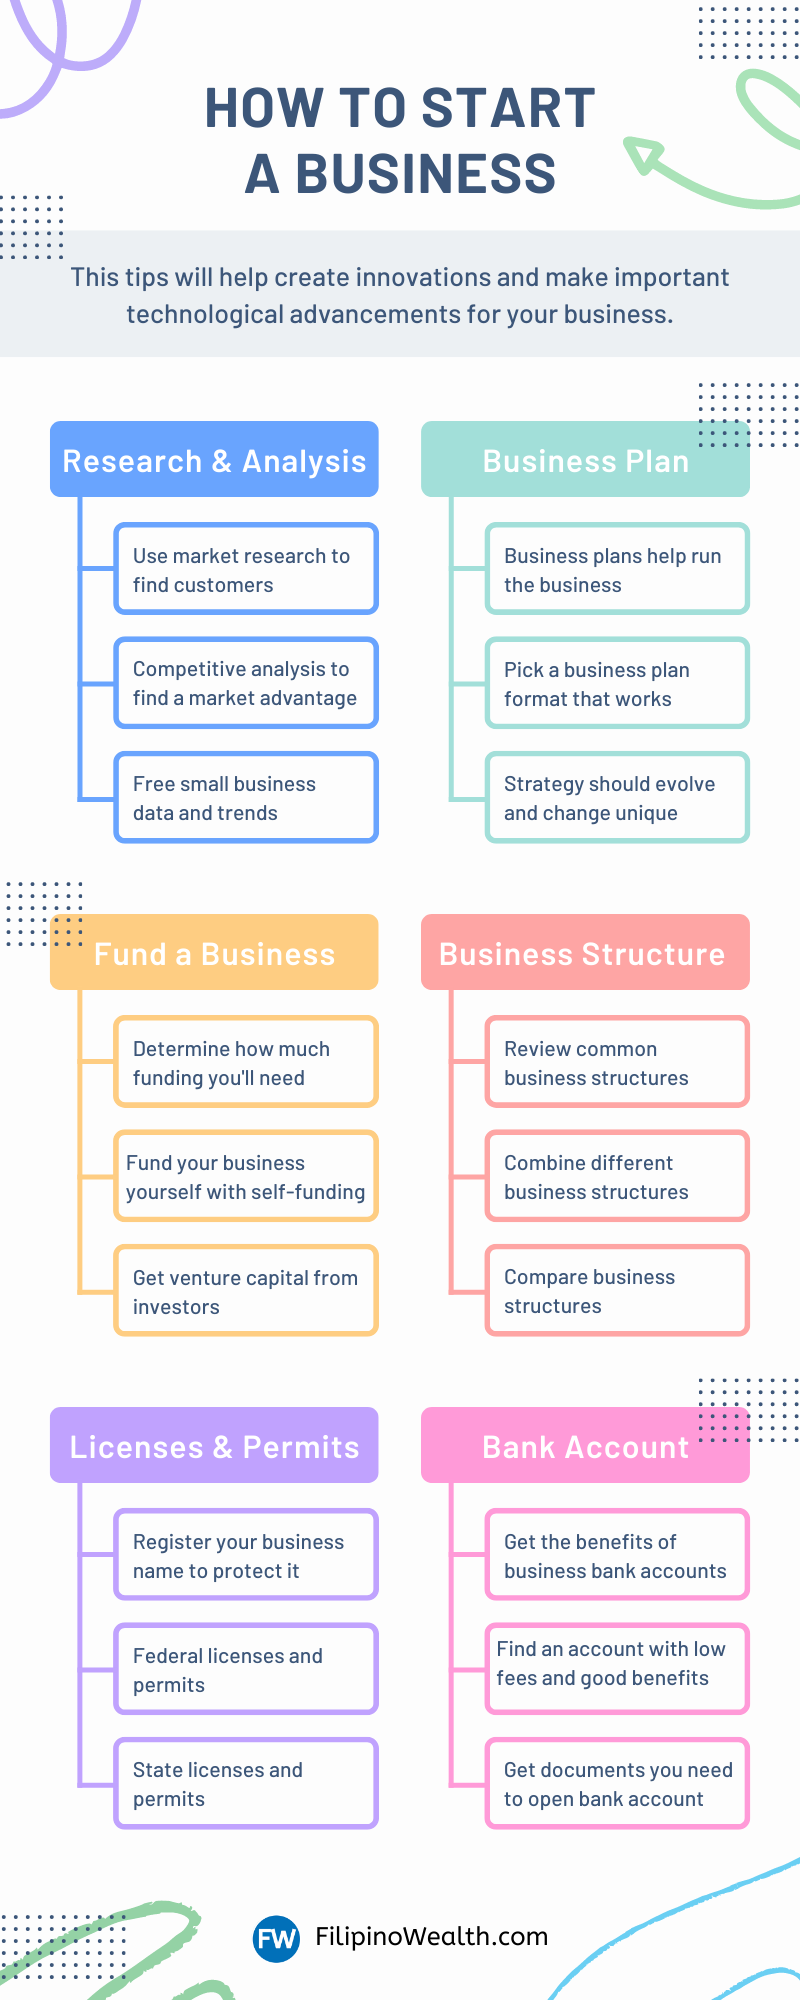 common business ideas philippines 